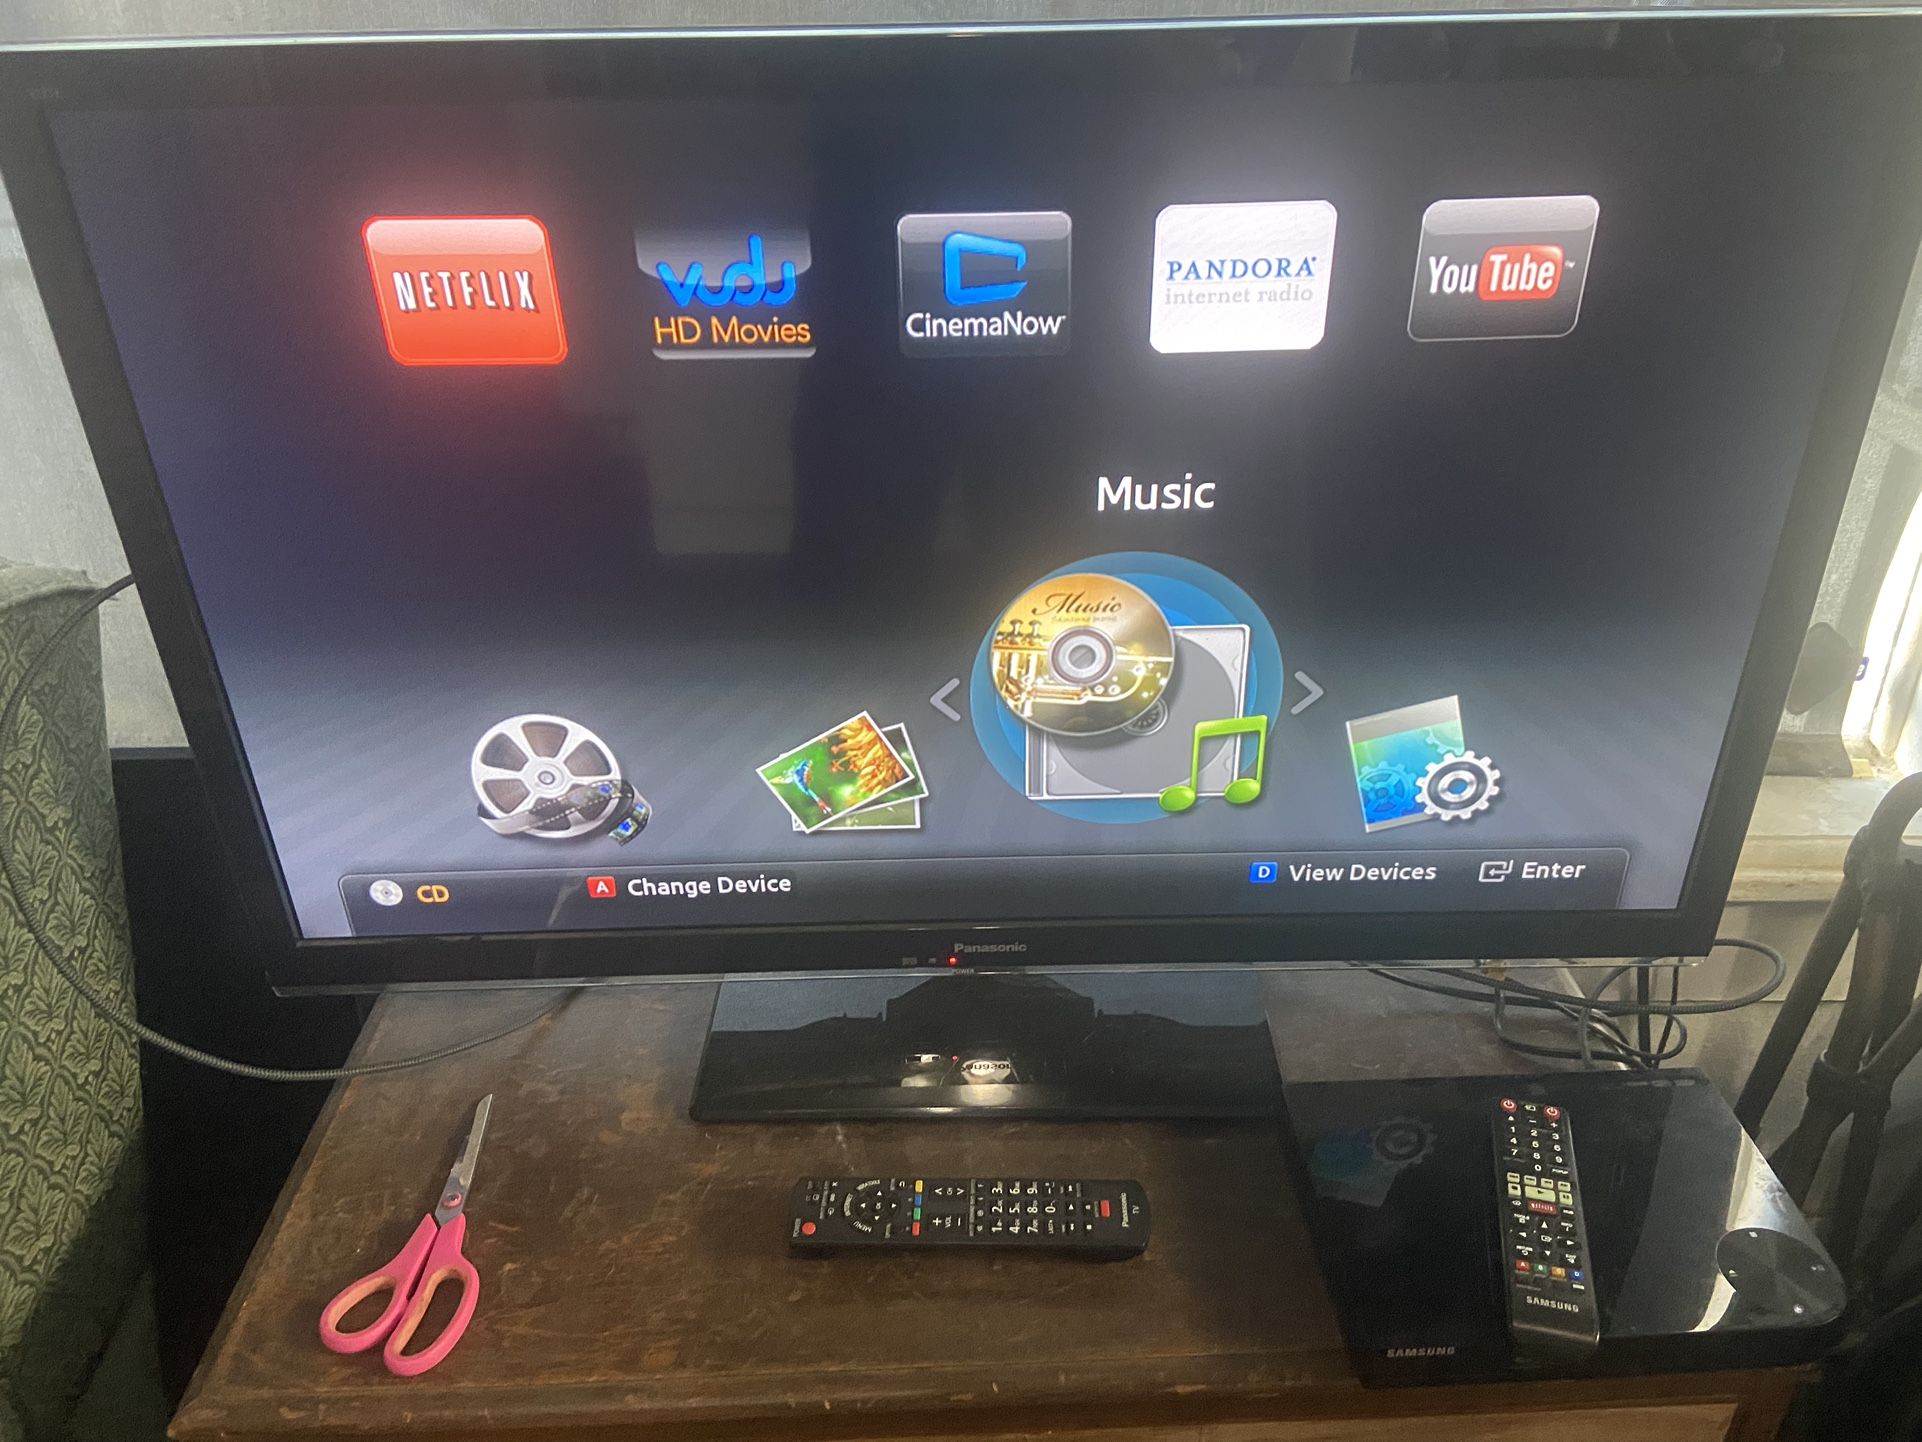 Panasonic Tv. 42” With Remote And Samsung Smart Blu ray 